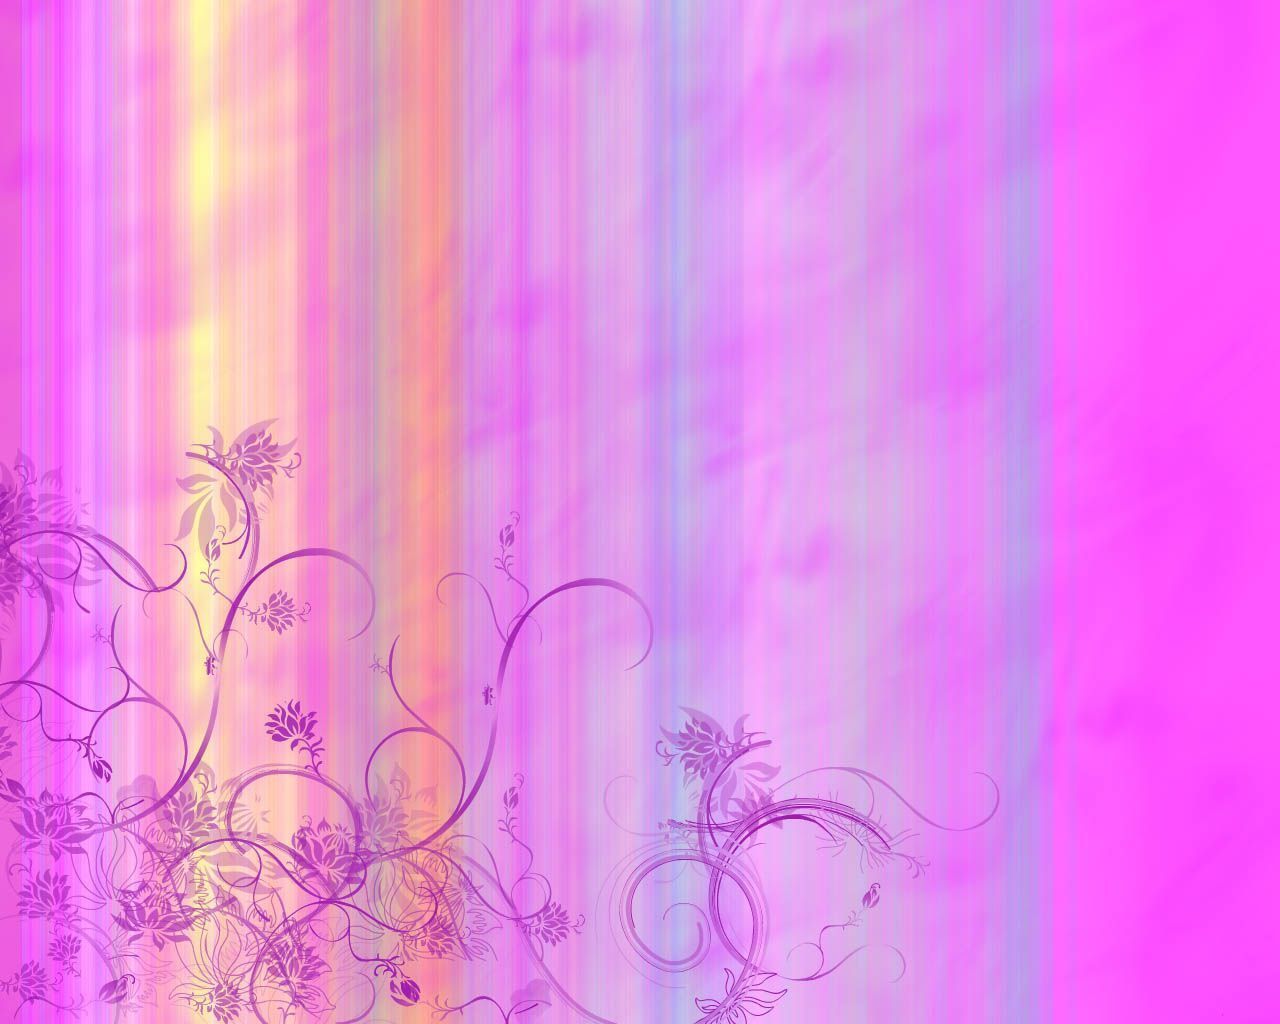 Pink wallpapers hd wallpaper download free wallpaper